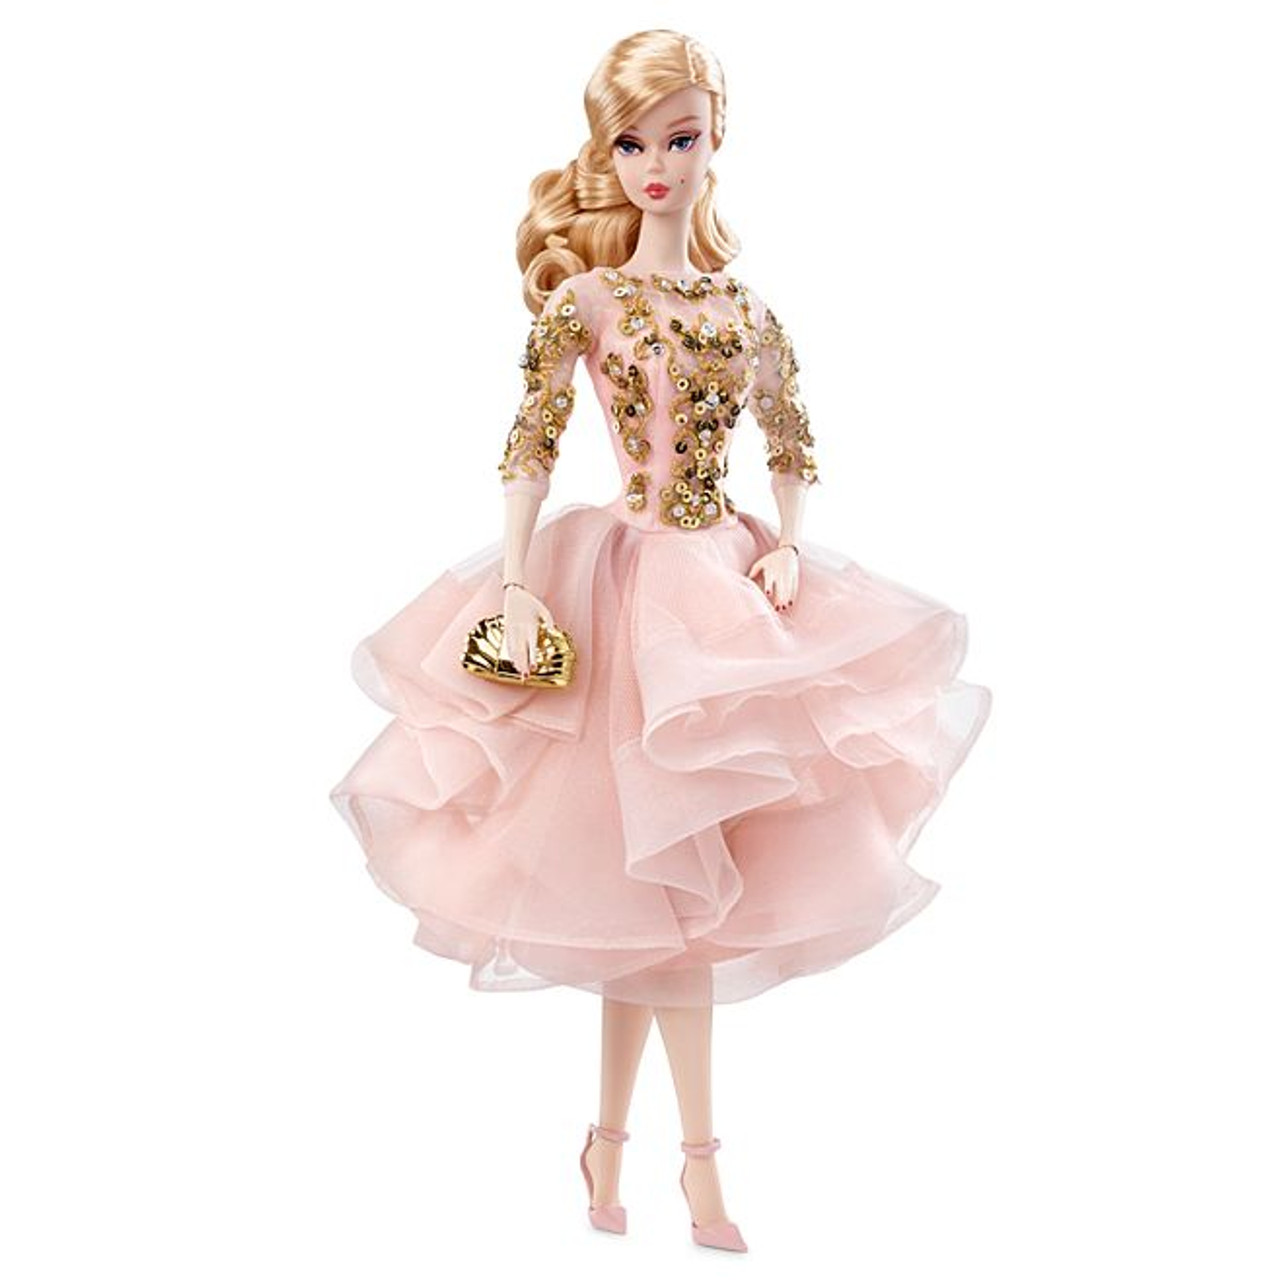 34 Gold Label Barbie Dolls Label Design Ideas 2020